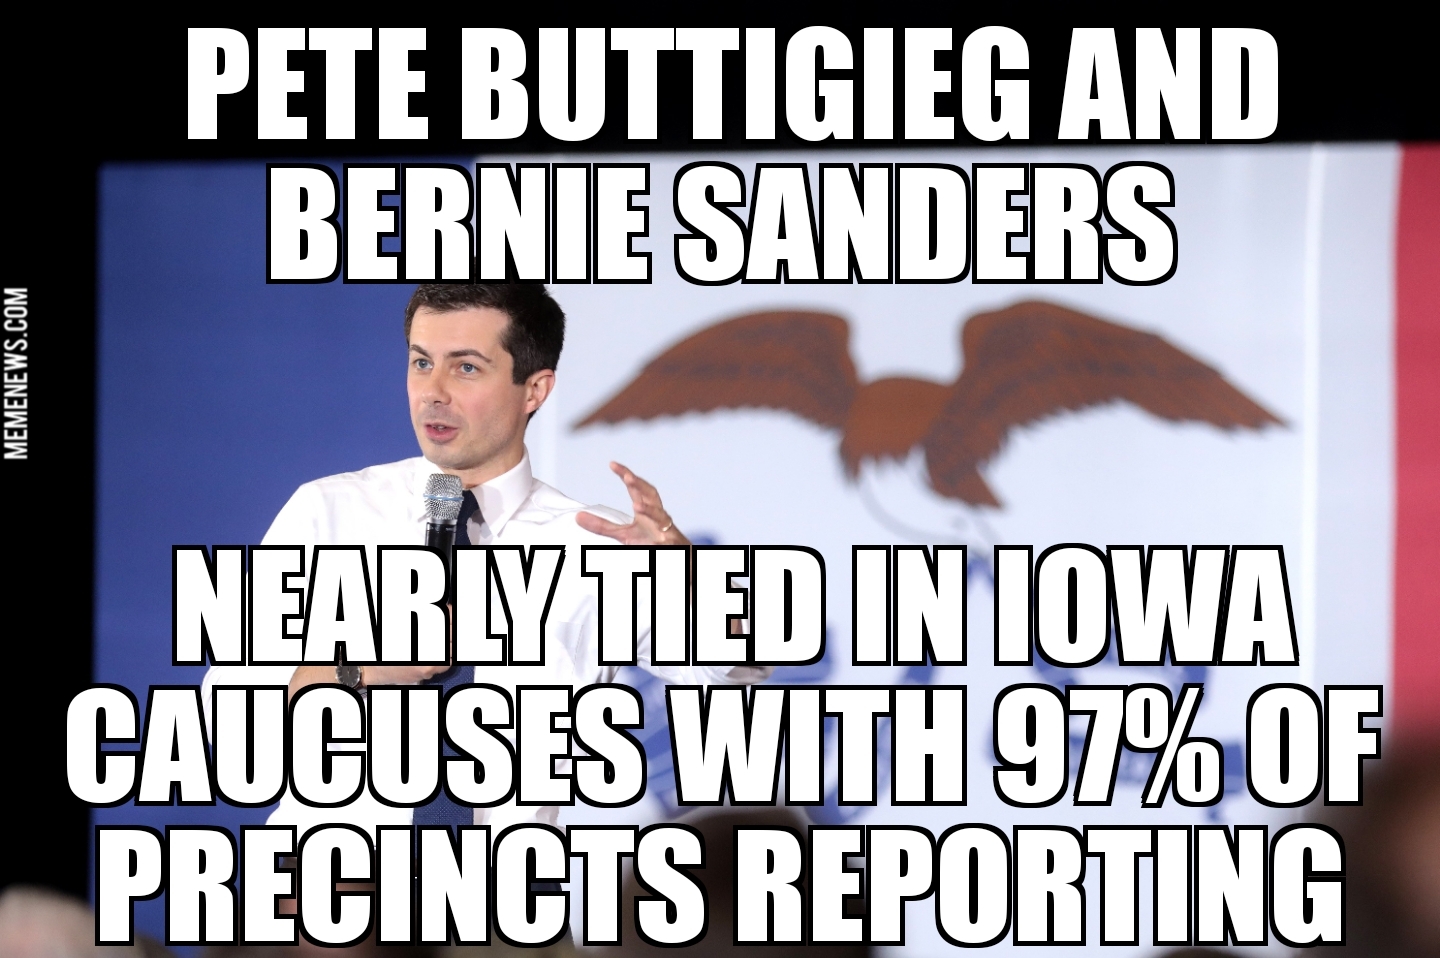 Pete Buttigieg and Bernie Sanders nearly tied in Iowa Caucuses